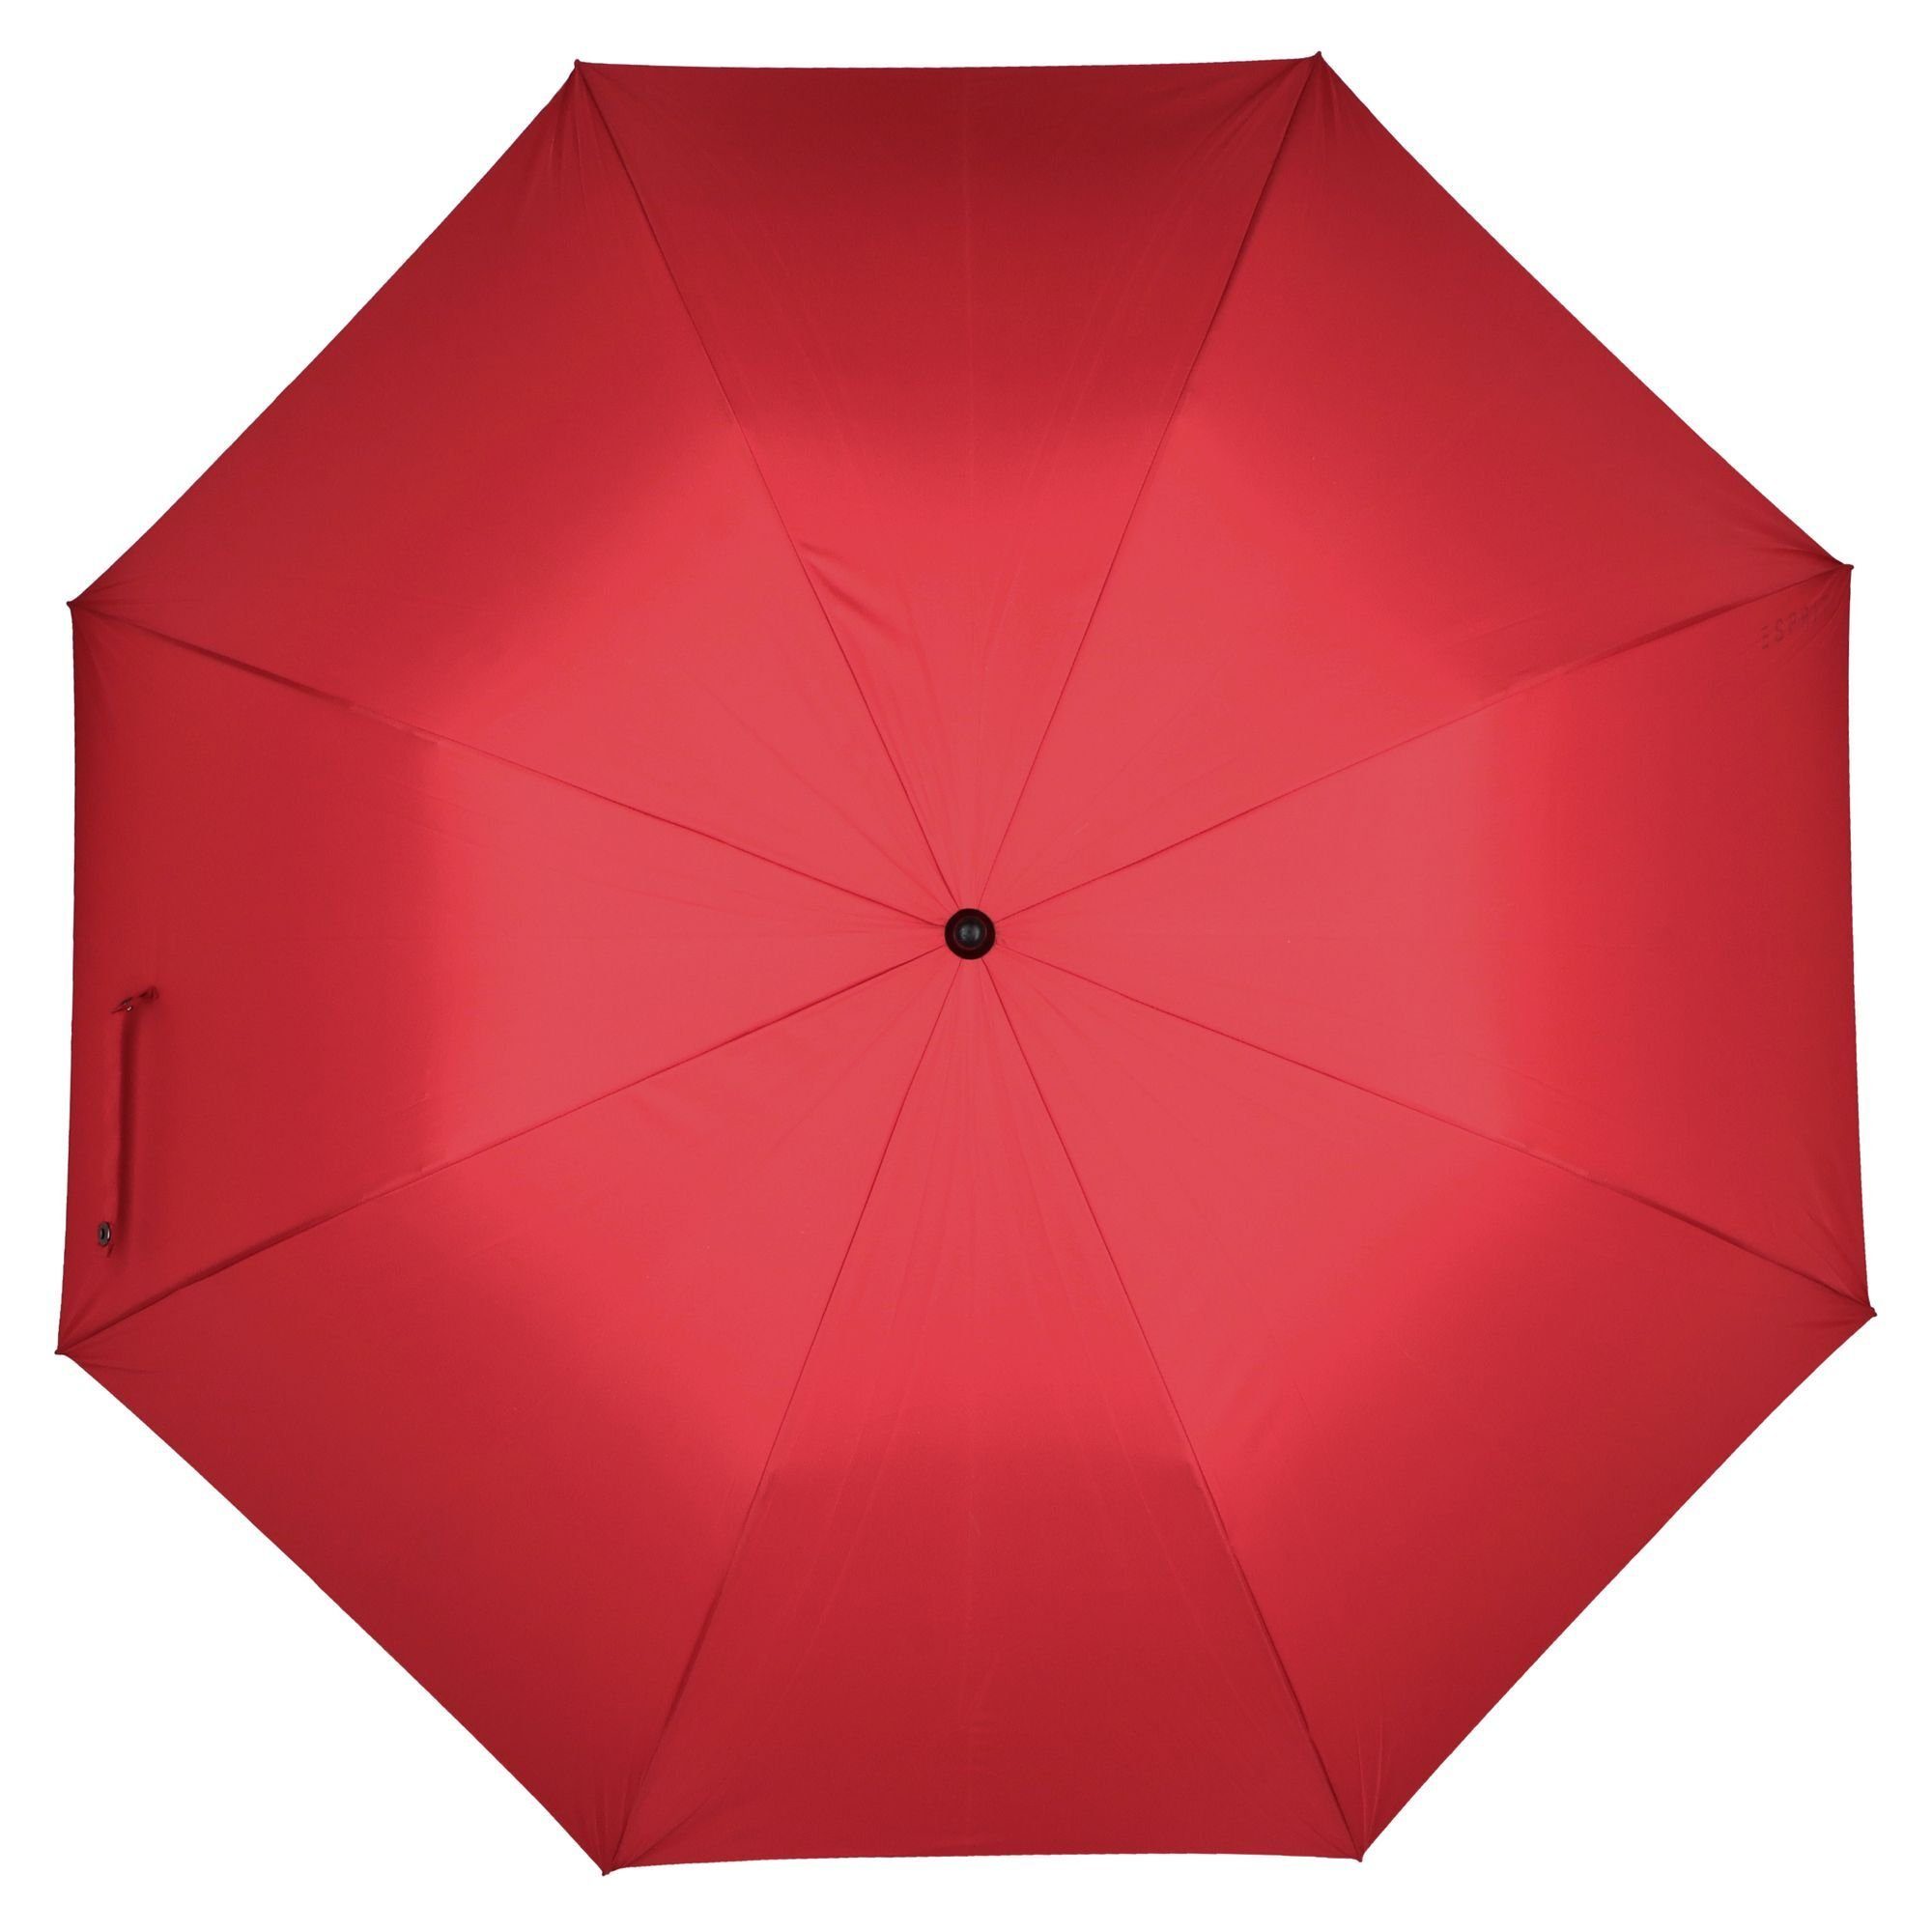 Stockregenschirm, flag Esprit 117cm red